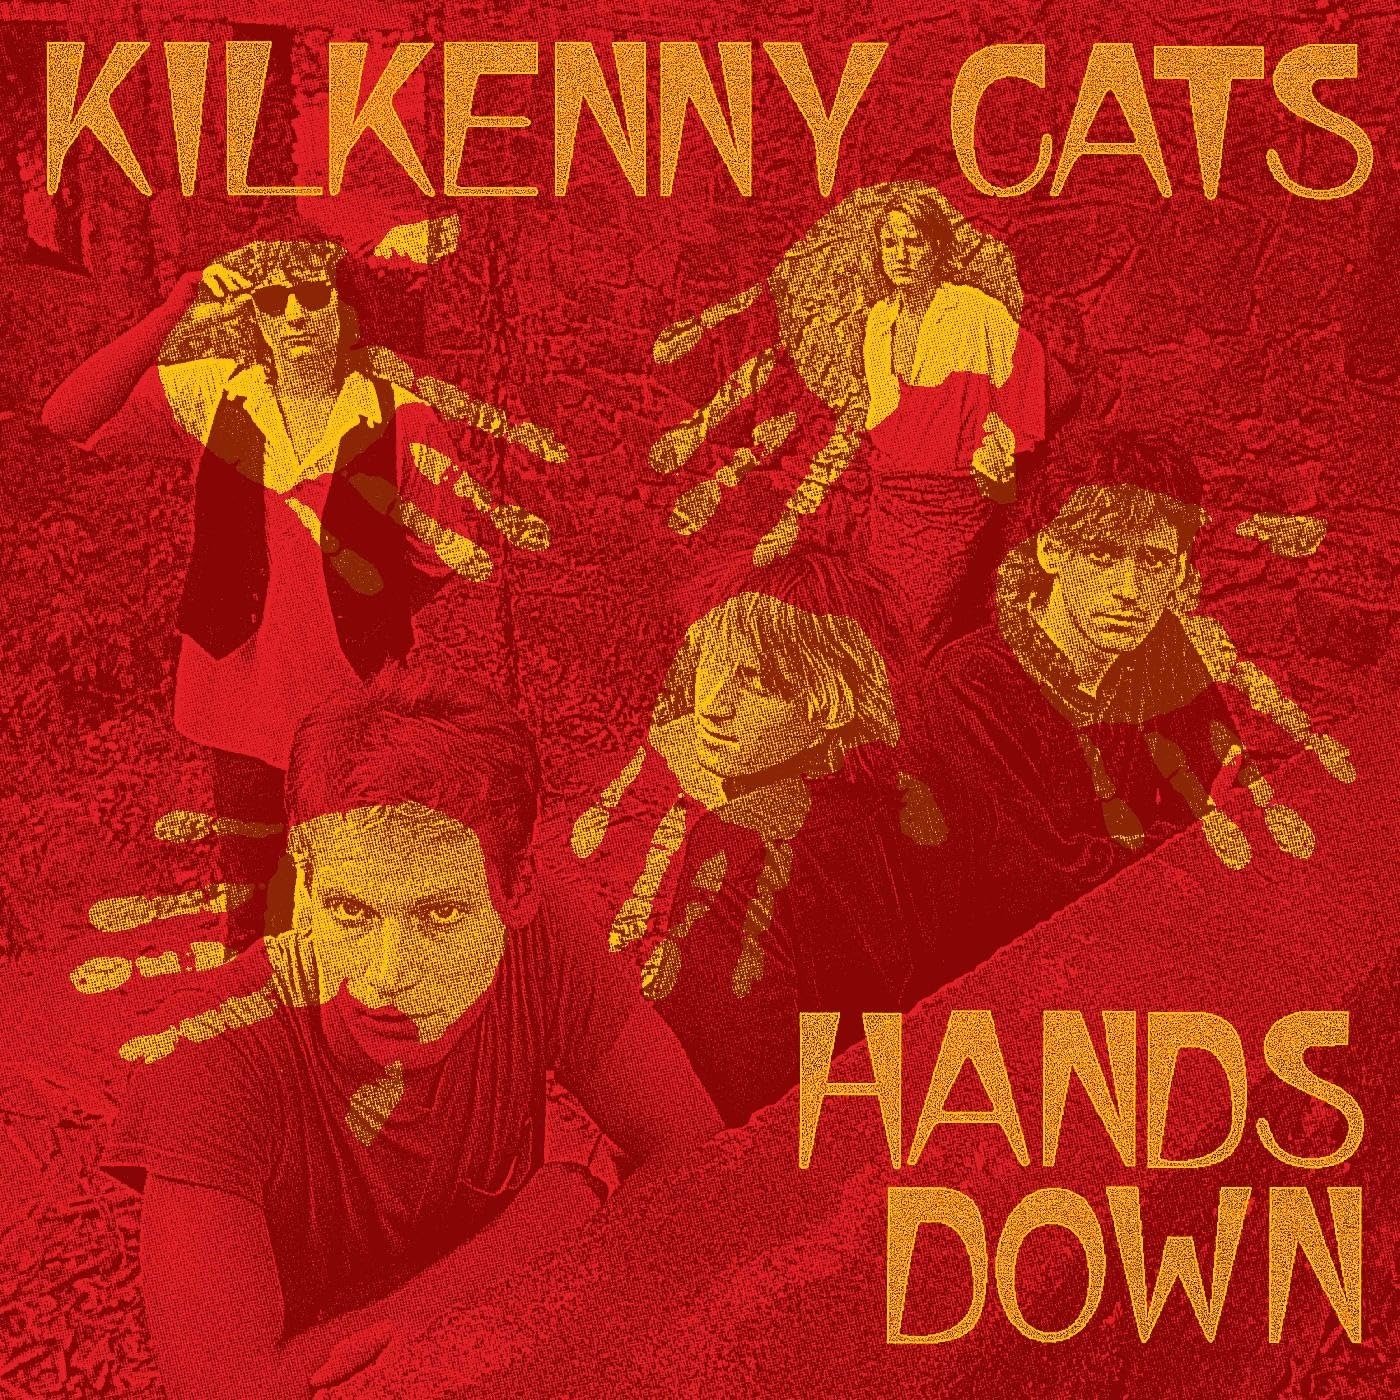 CD Shop - KILKENNY CATS HANDS DOWN